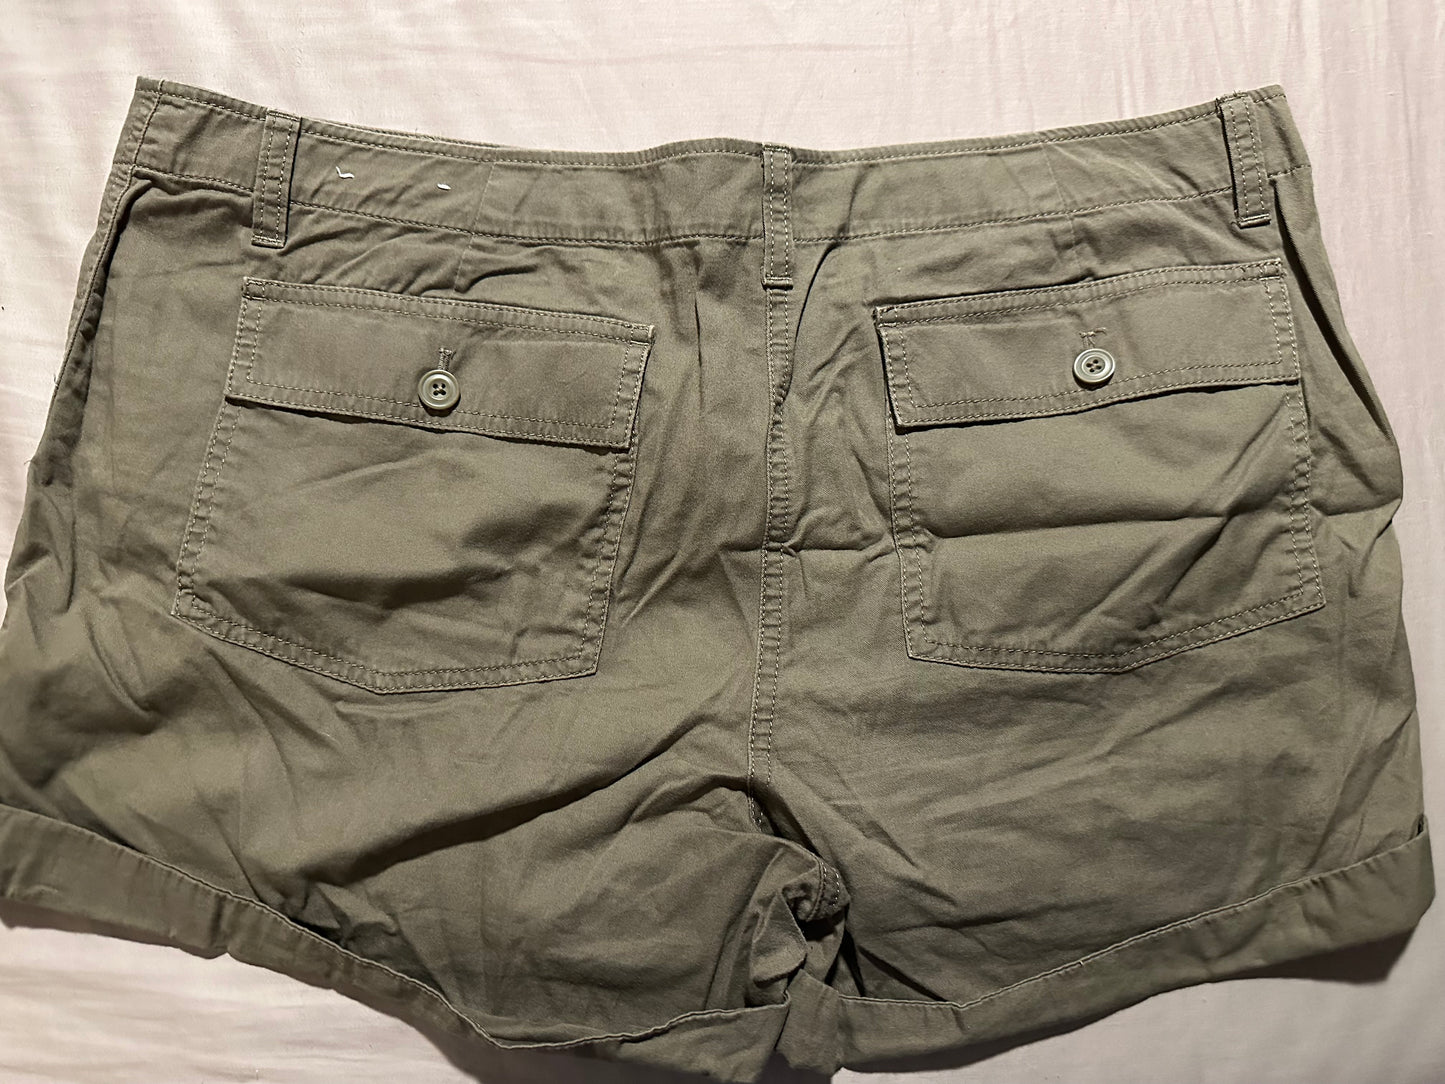 LOFT size 14 shorts